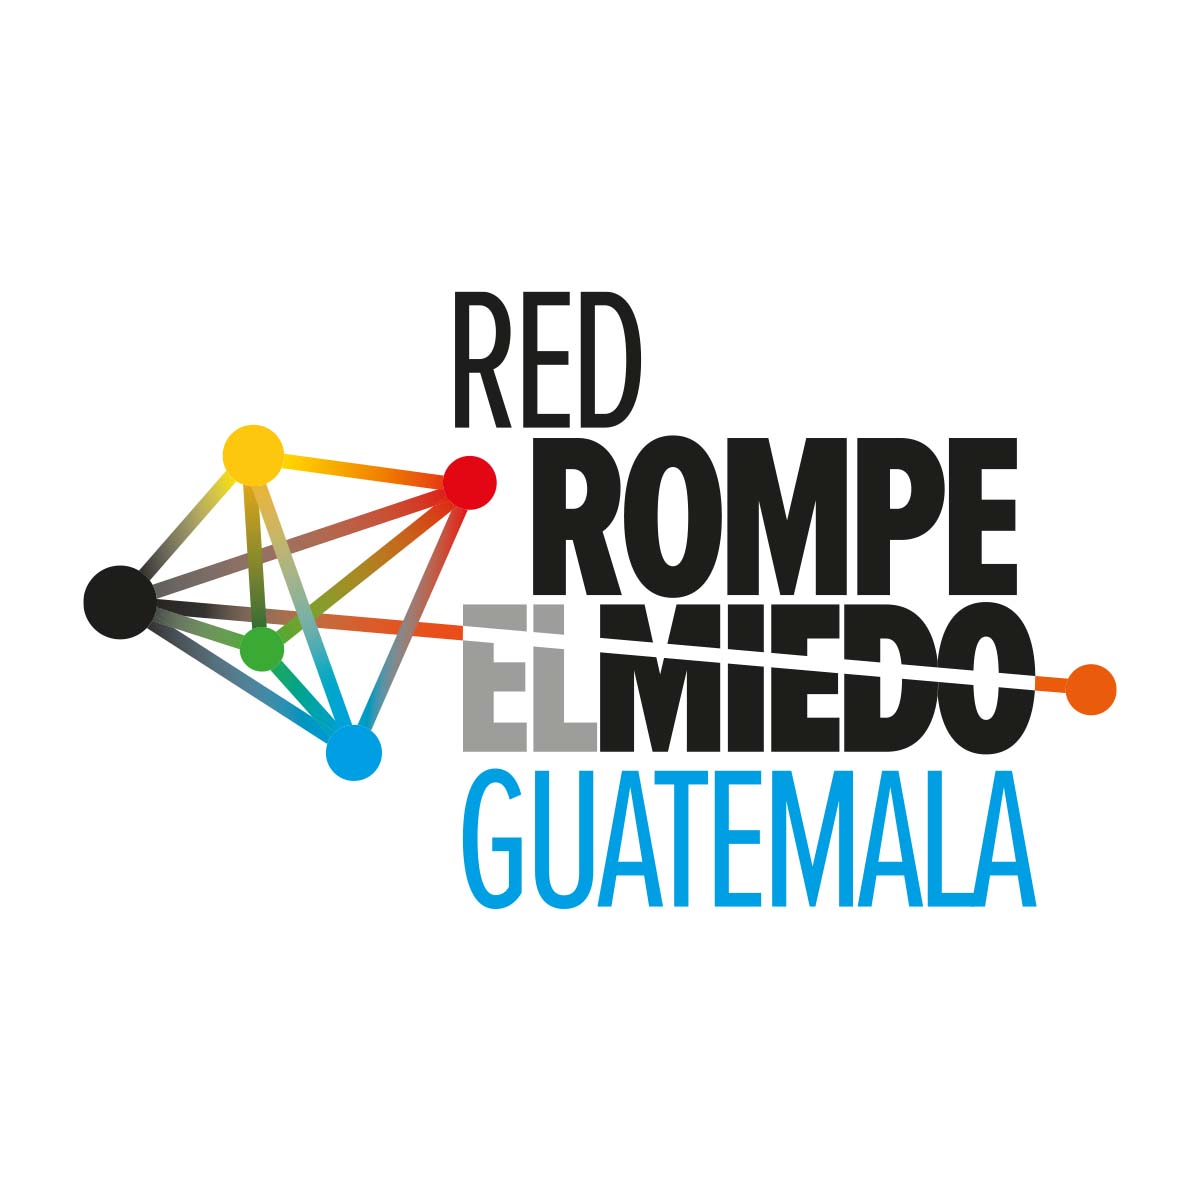 Red Rompe el Miedo Guatemala